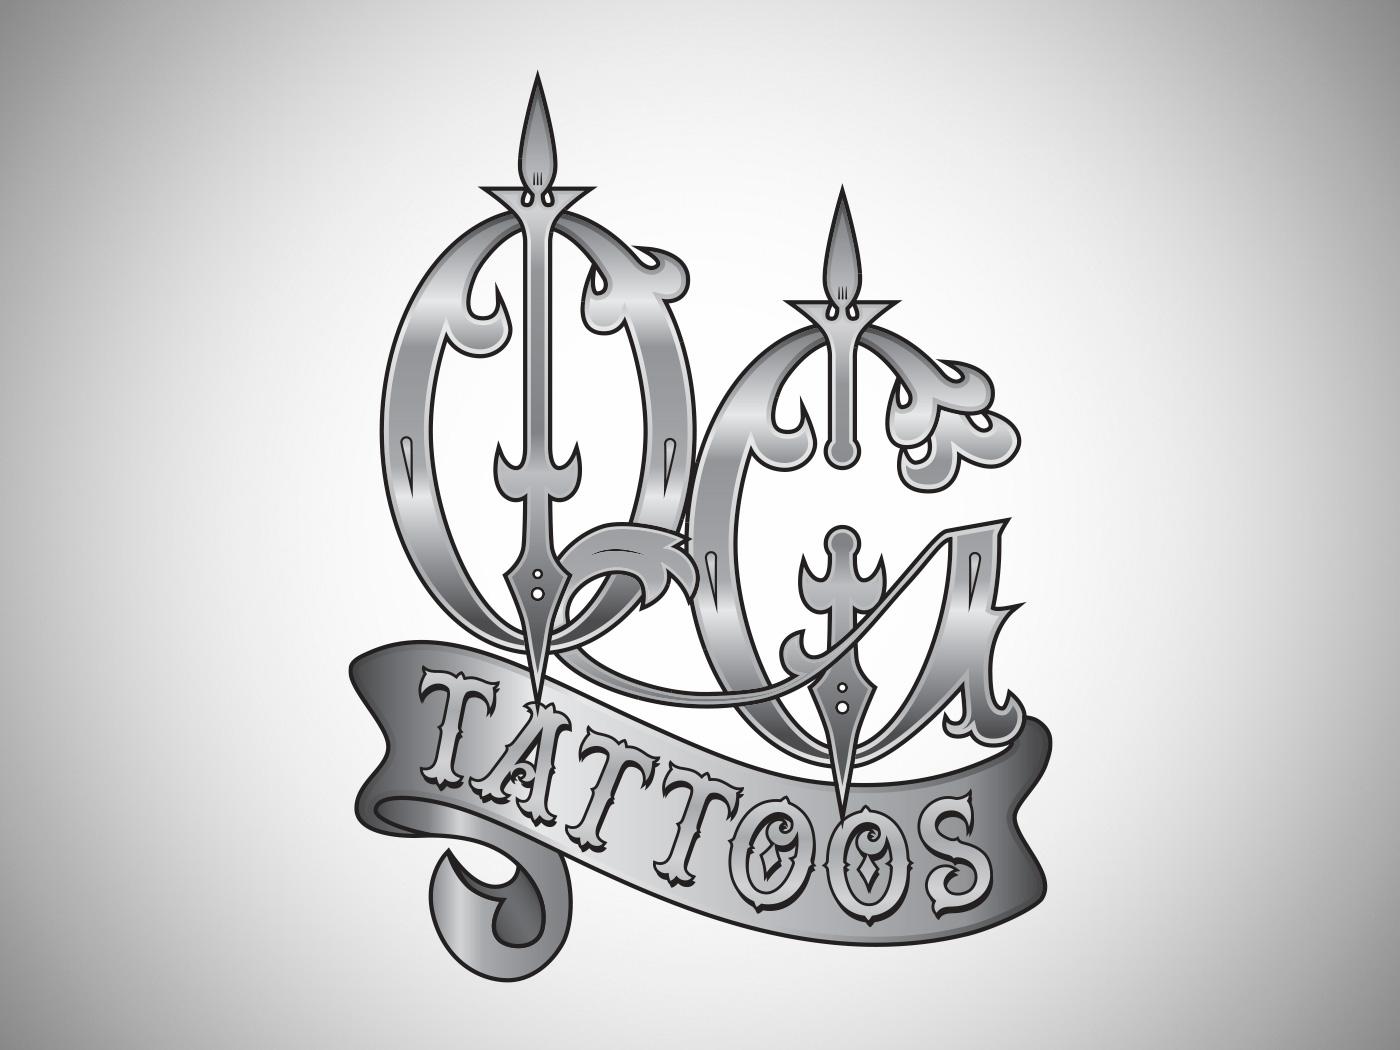 11Orm Grutters Tattoos OGT ZW logo